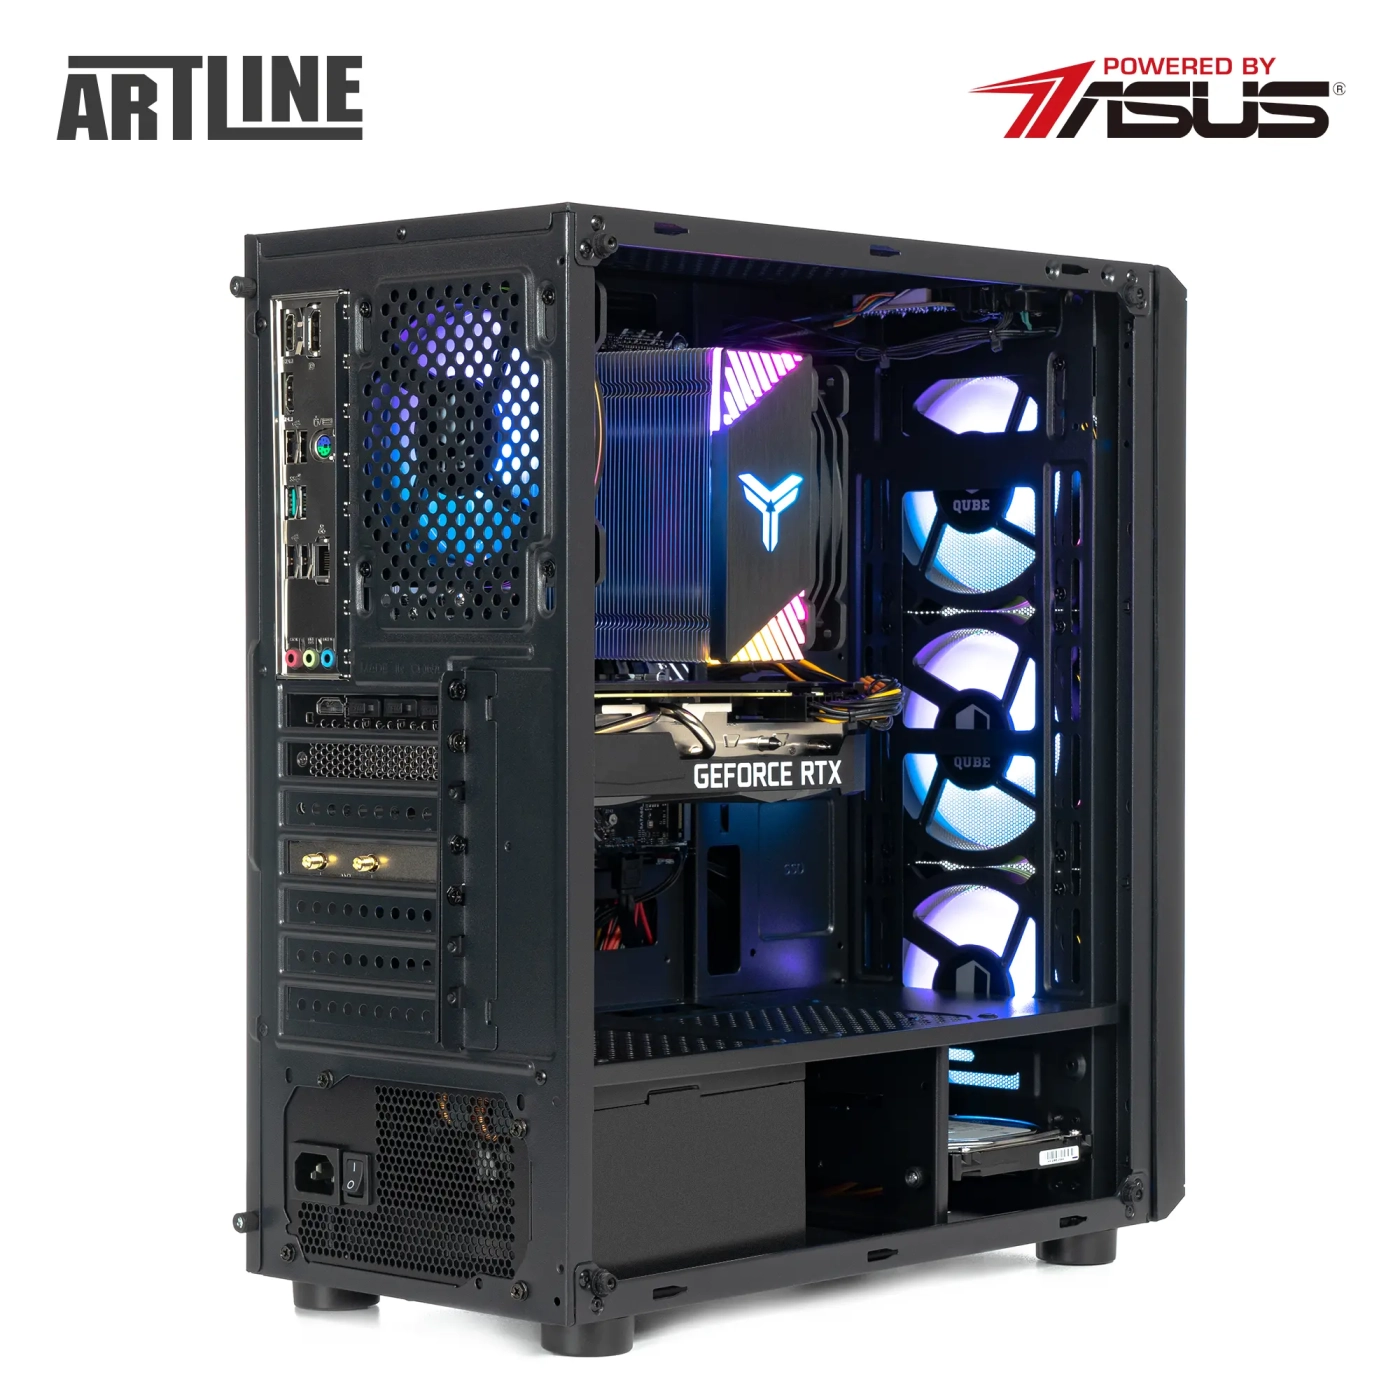 Купить Компьютер ARTLINE Gaming X55 (X55v51) - фото 10